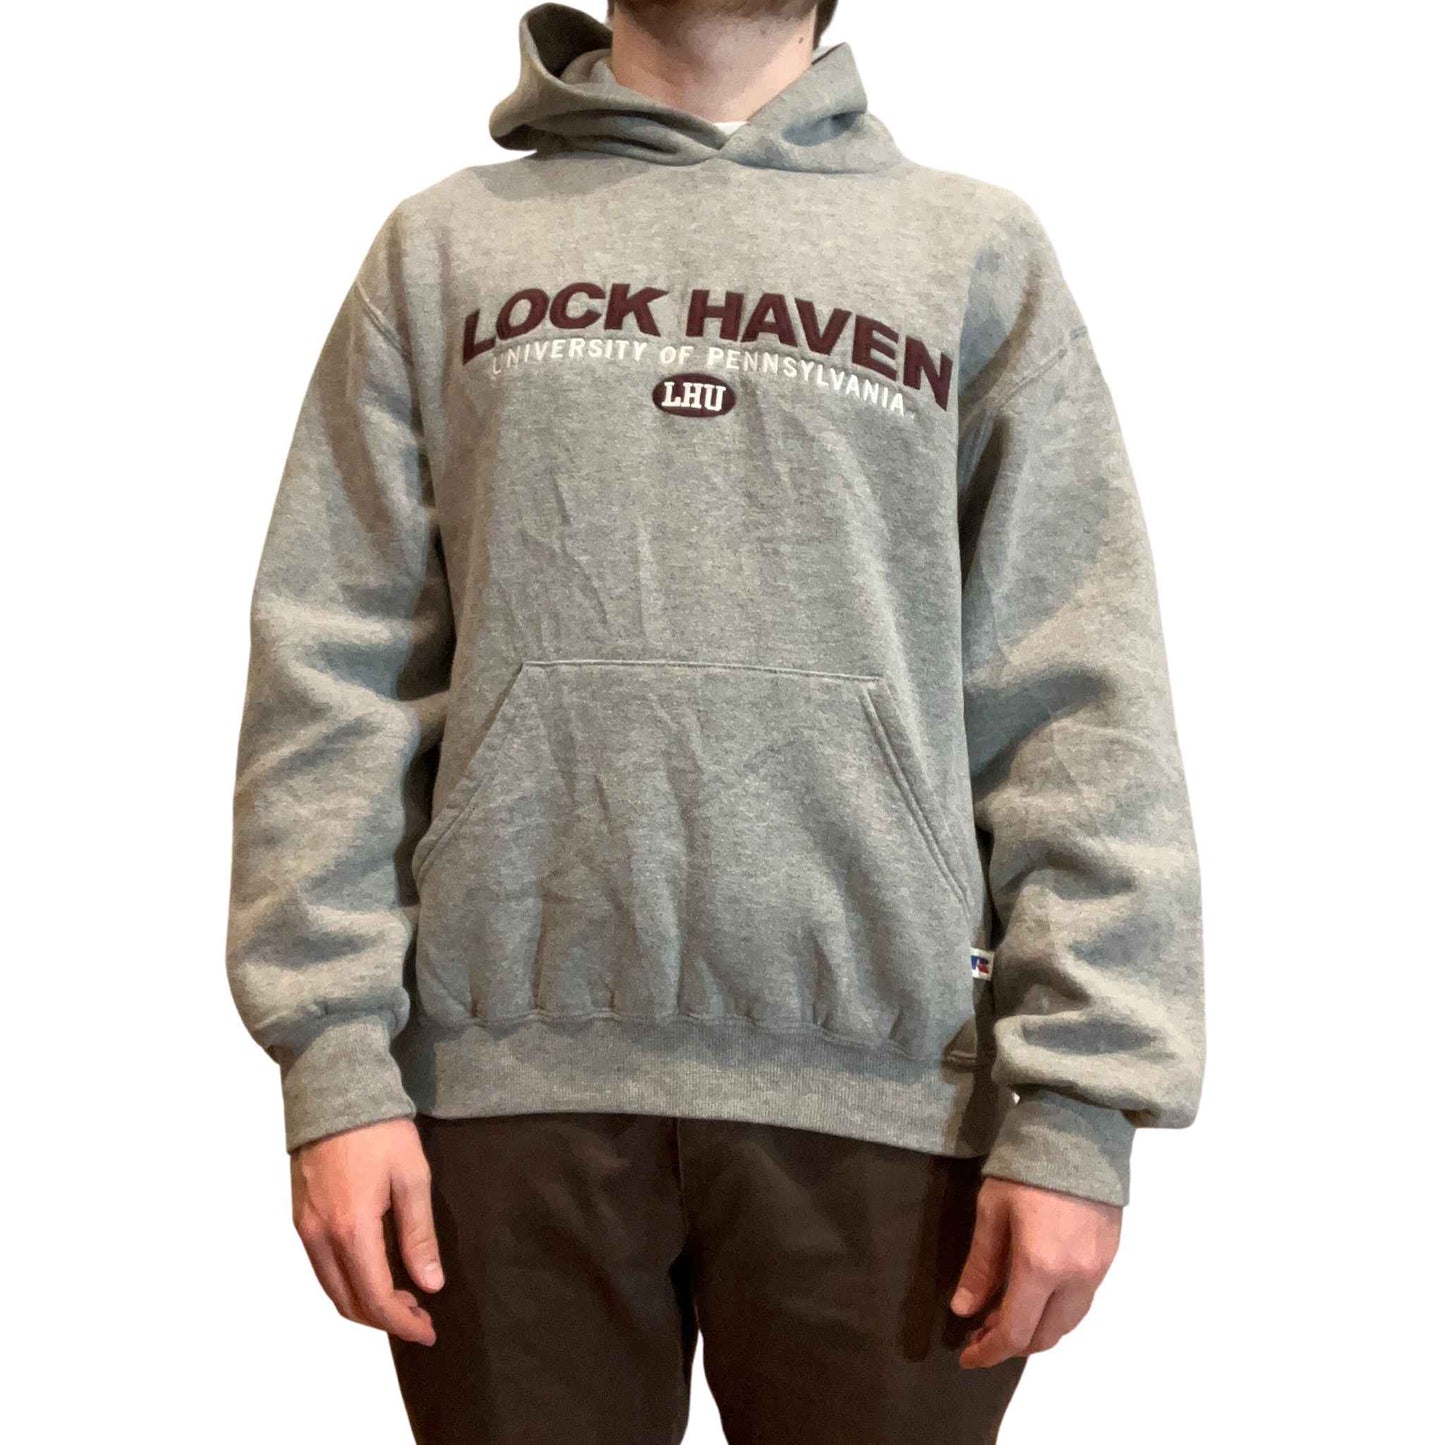 Lock Haven University of Pennsylvania: Vintage American Sweatshirt | Size M